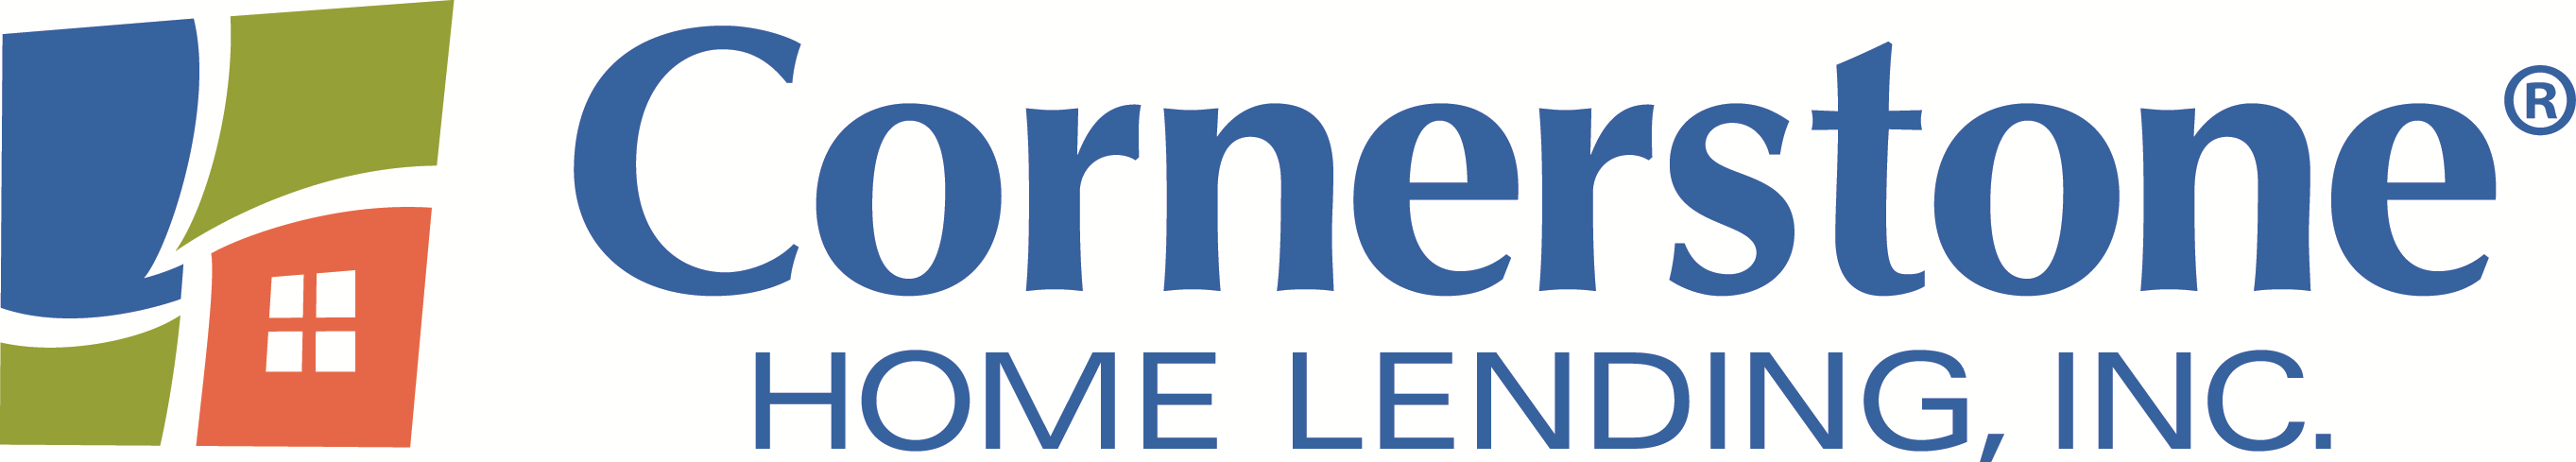 Cornerstone Home Lending, Inc Company Logo